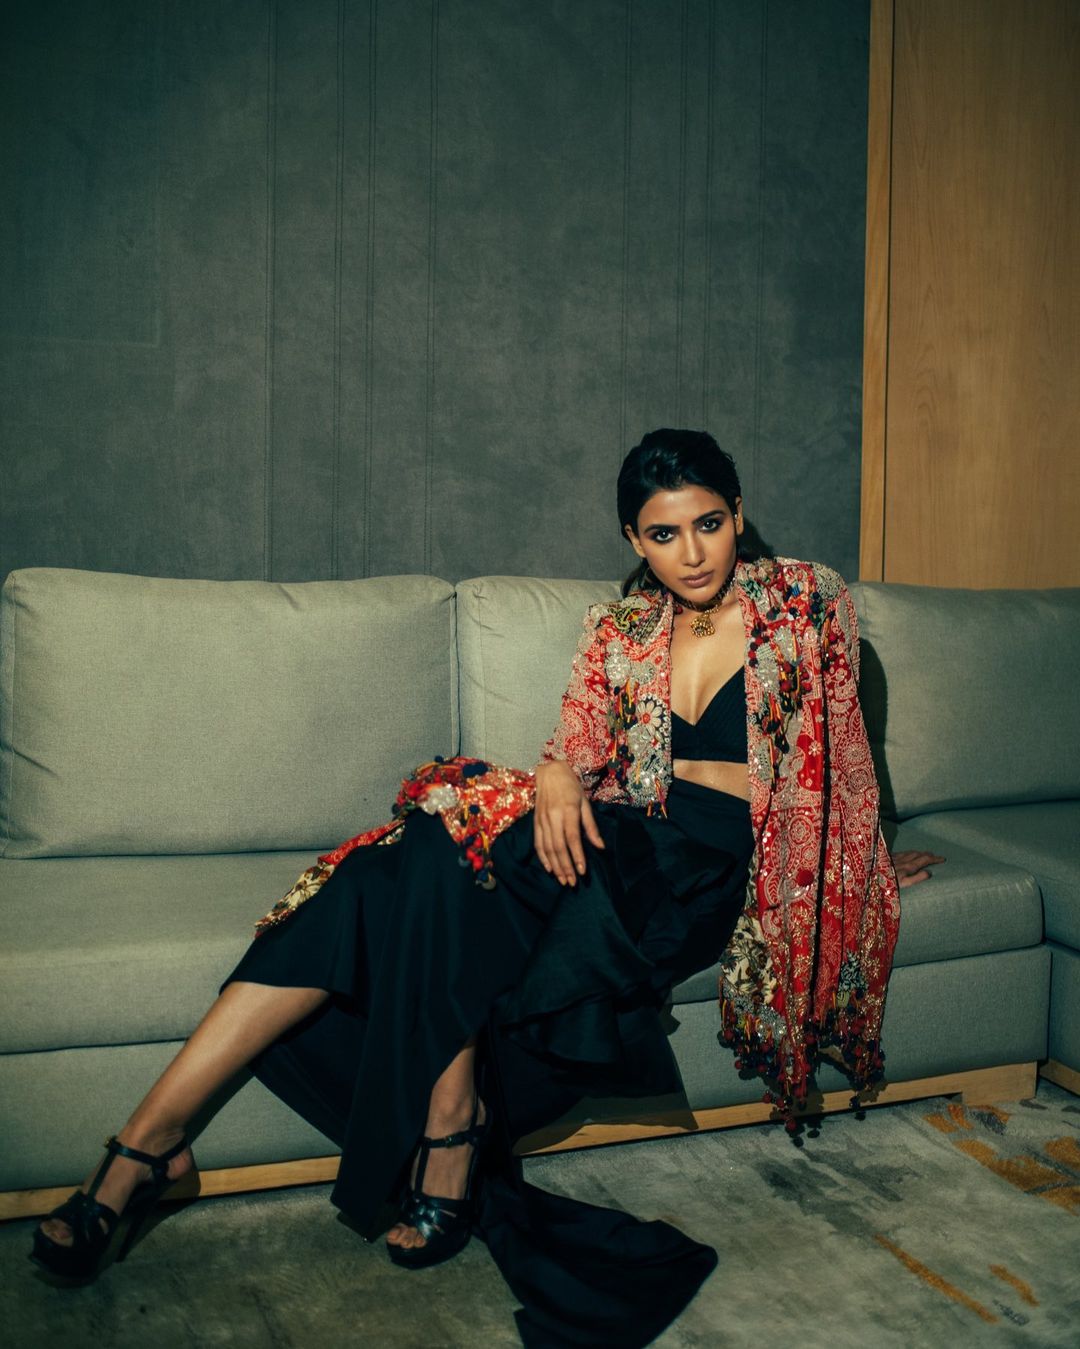 Samantha Ruth Prabhu's bold and powerful looks give boss lady vibes 